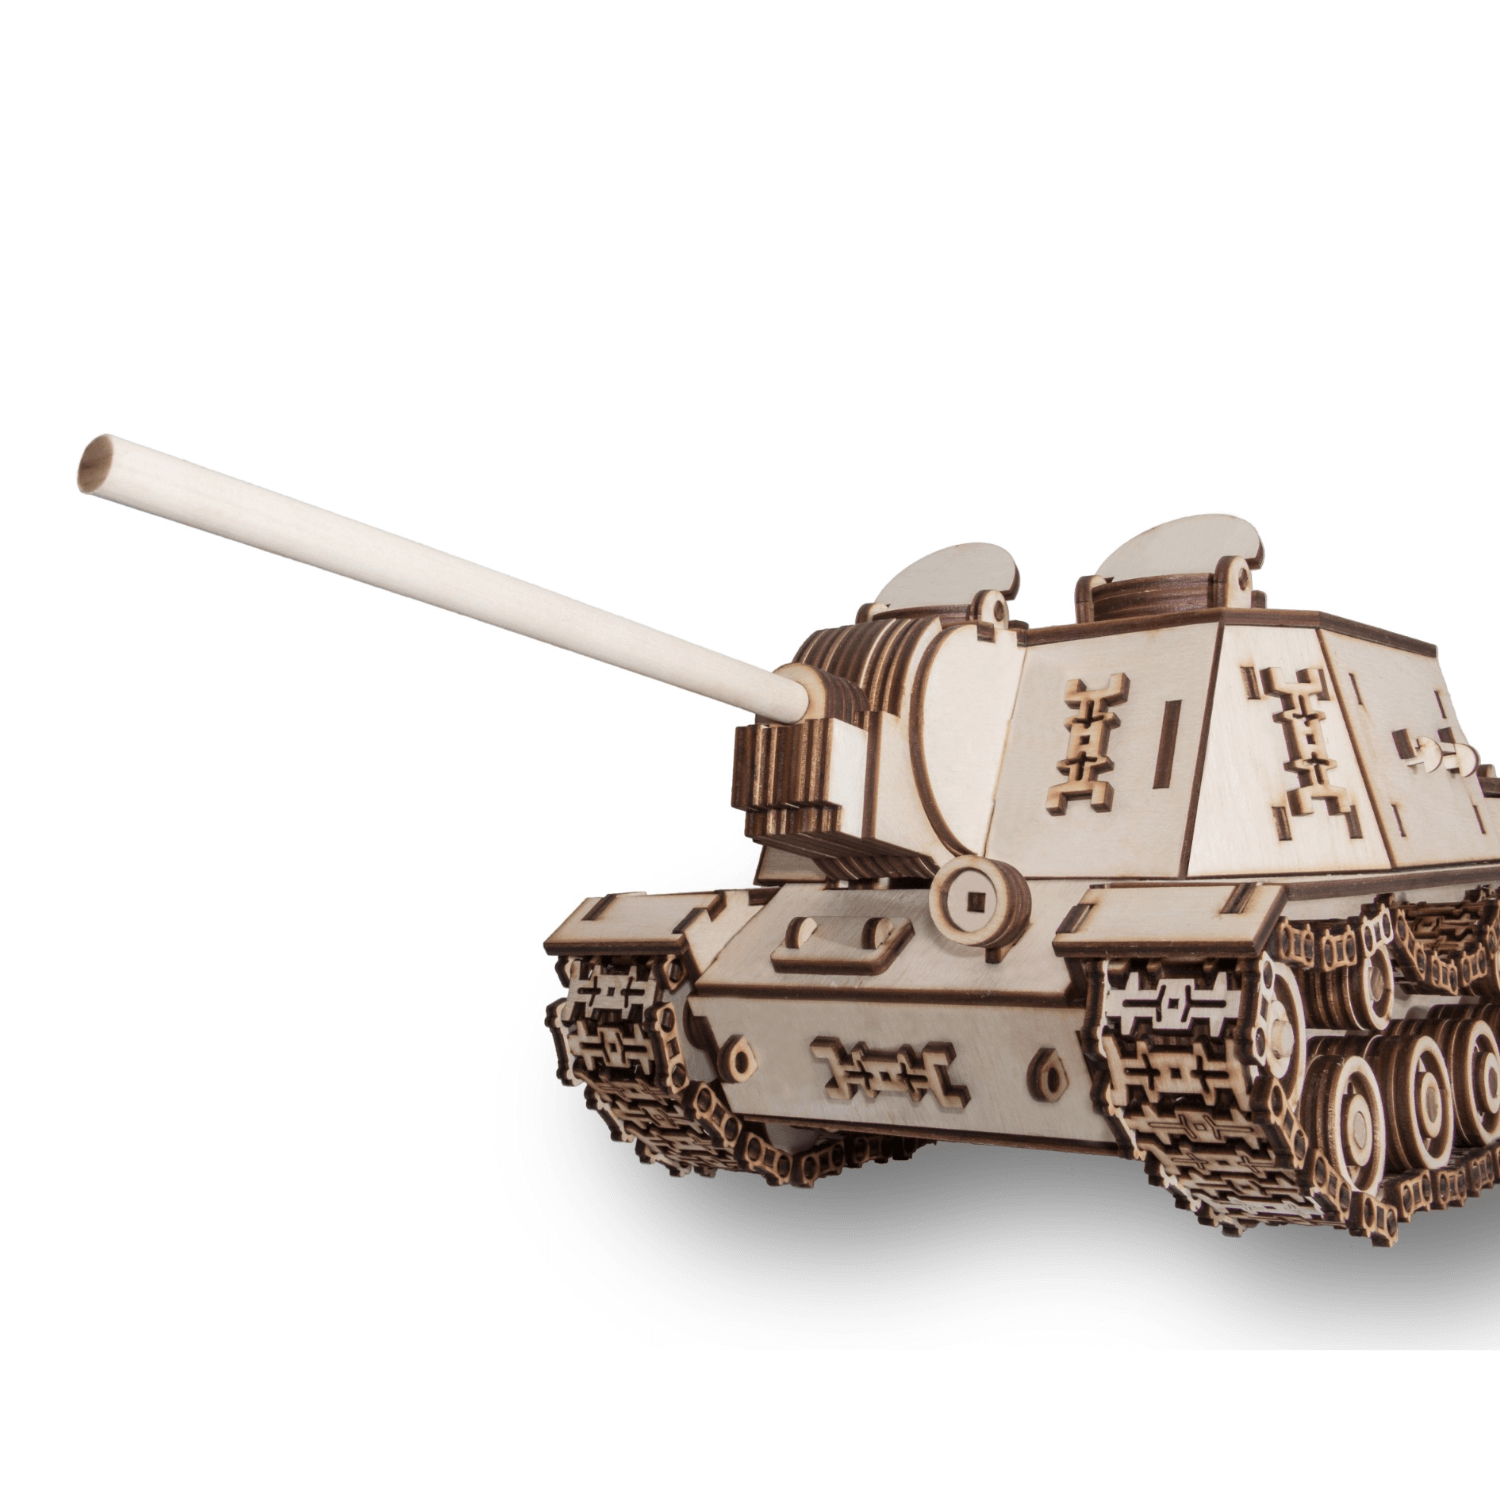 TANK ISU-152 | Panzer-Mechanisches Holzpuzzle-Eco-Wood-Art--